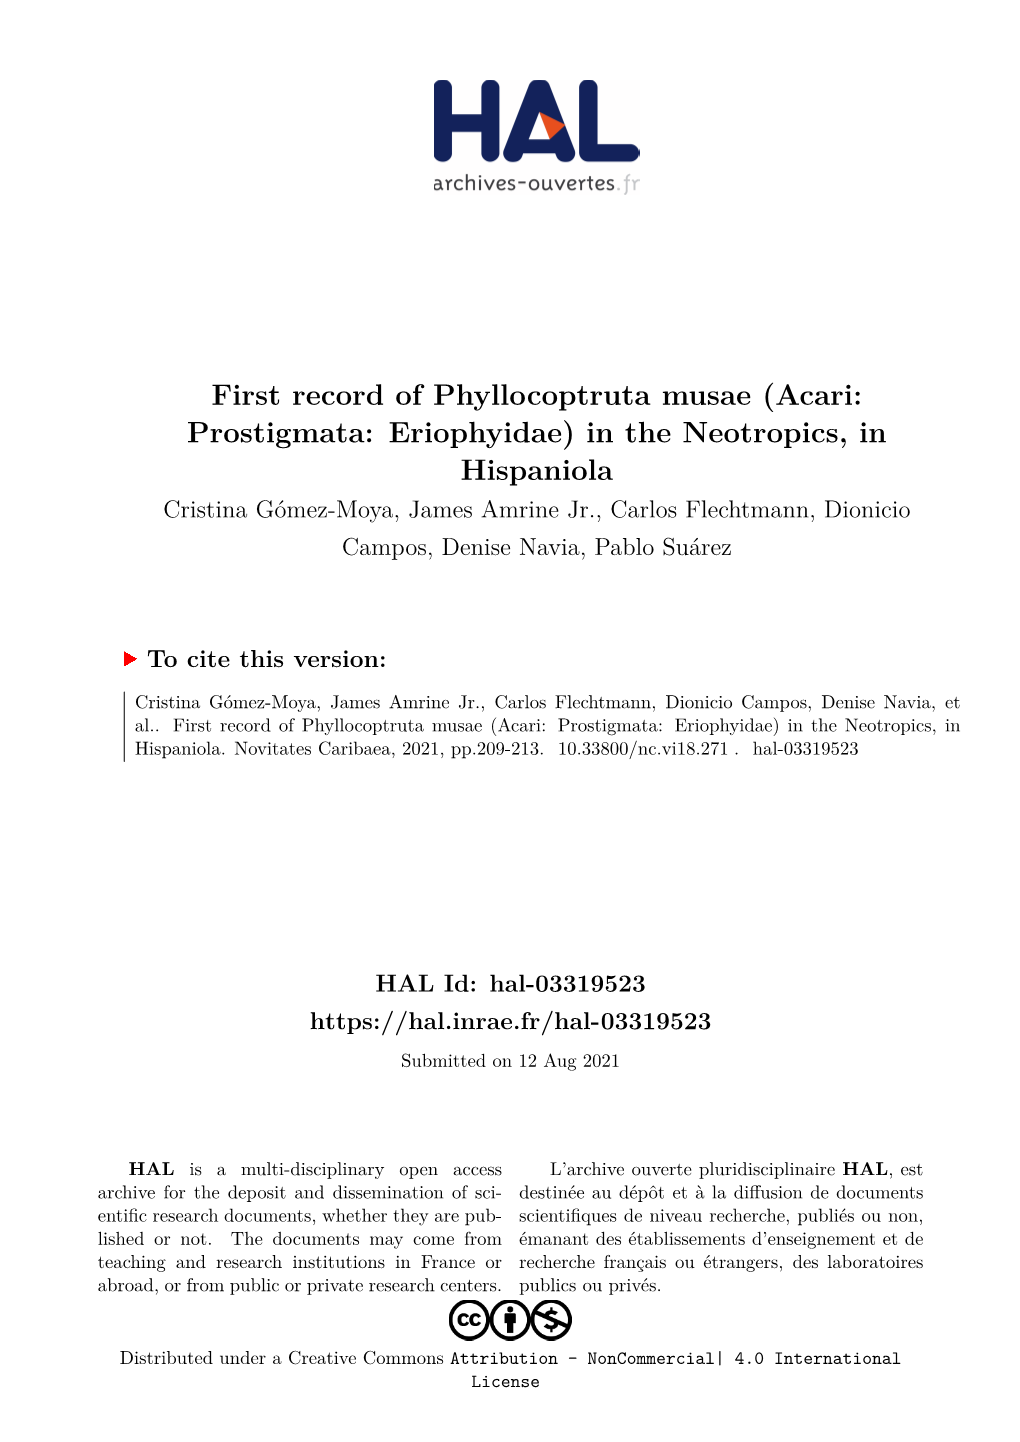 First Record of Phyllocoptruta Musae (Acari: Prostigmata: Eriophyidae)